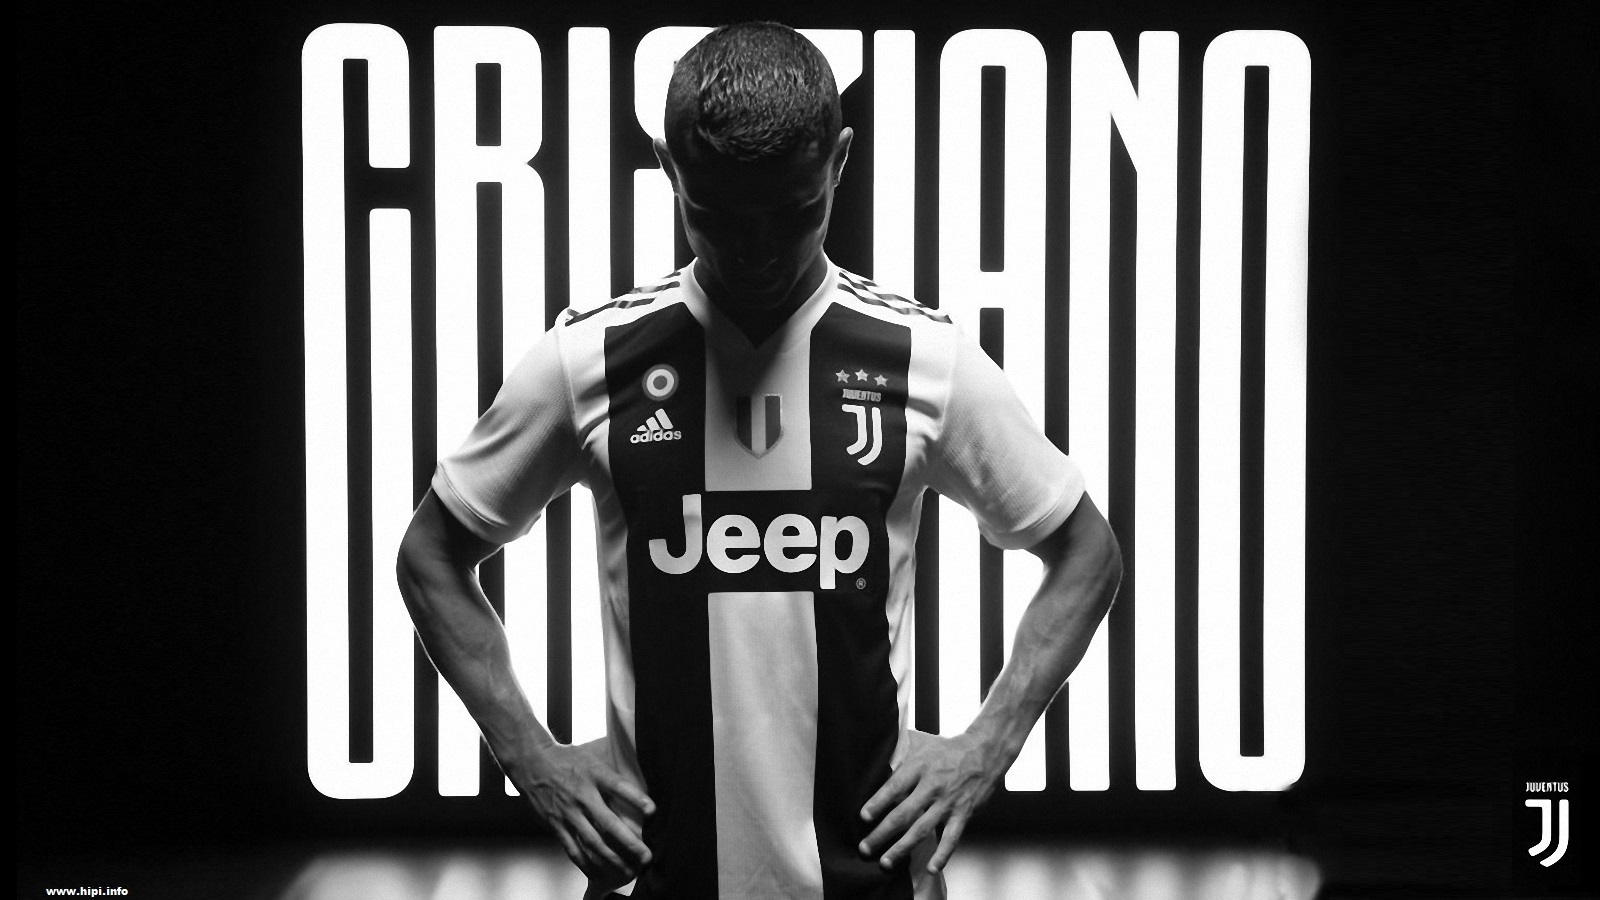 95 Cristiano Ronaldo Hd Wallpaper Juventus Free Download Myweb